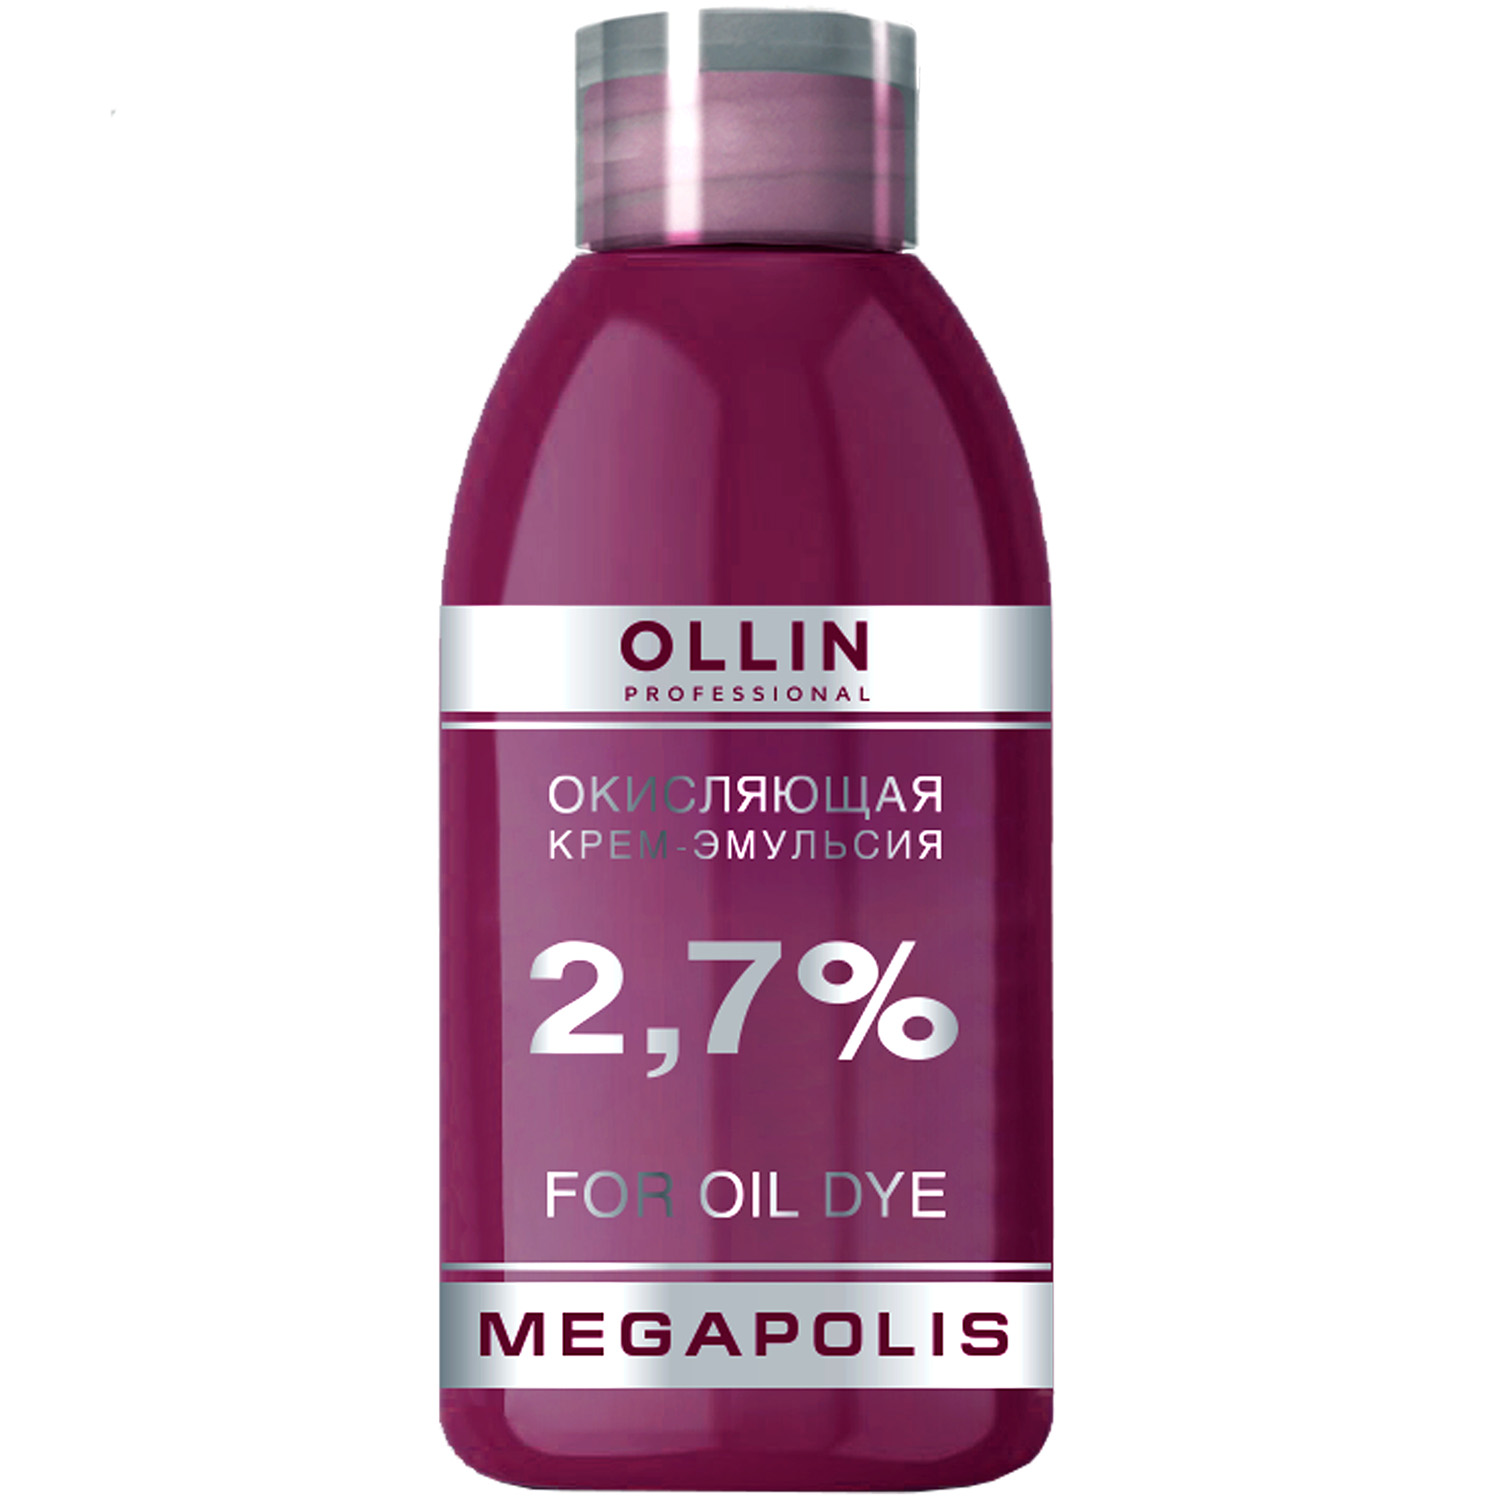 Ollin Professional Окисляющая крем-эмульсия 2,7%, 75 мл (Ollin Professional, Megapolis) окисляющая крем эмульсия 1% ollin professional megapolis 75 мл